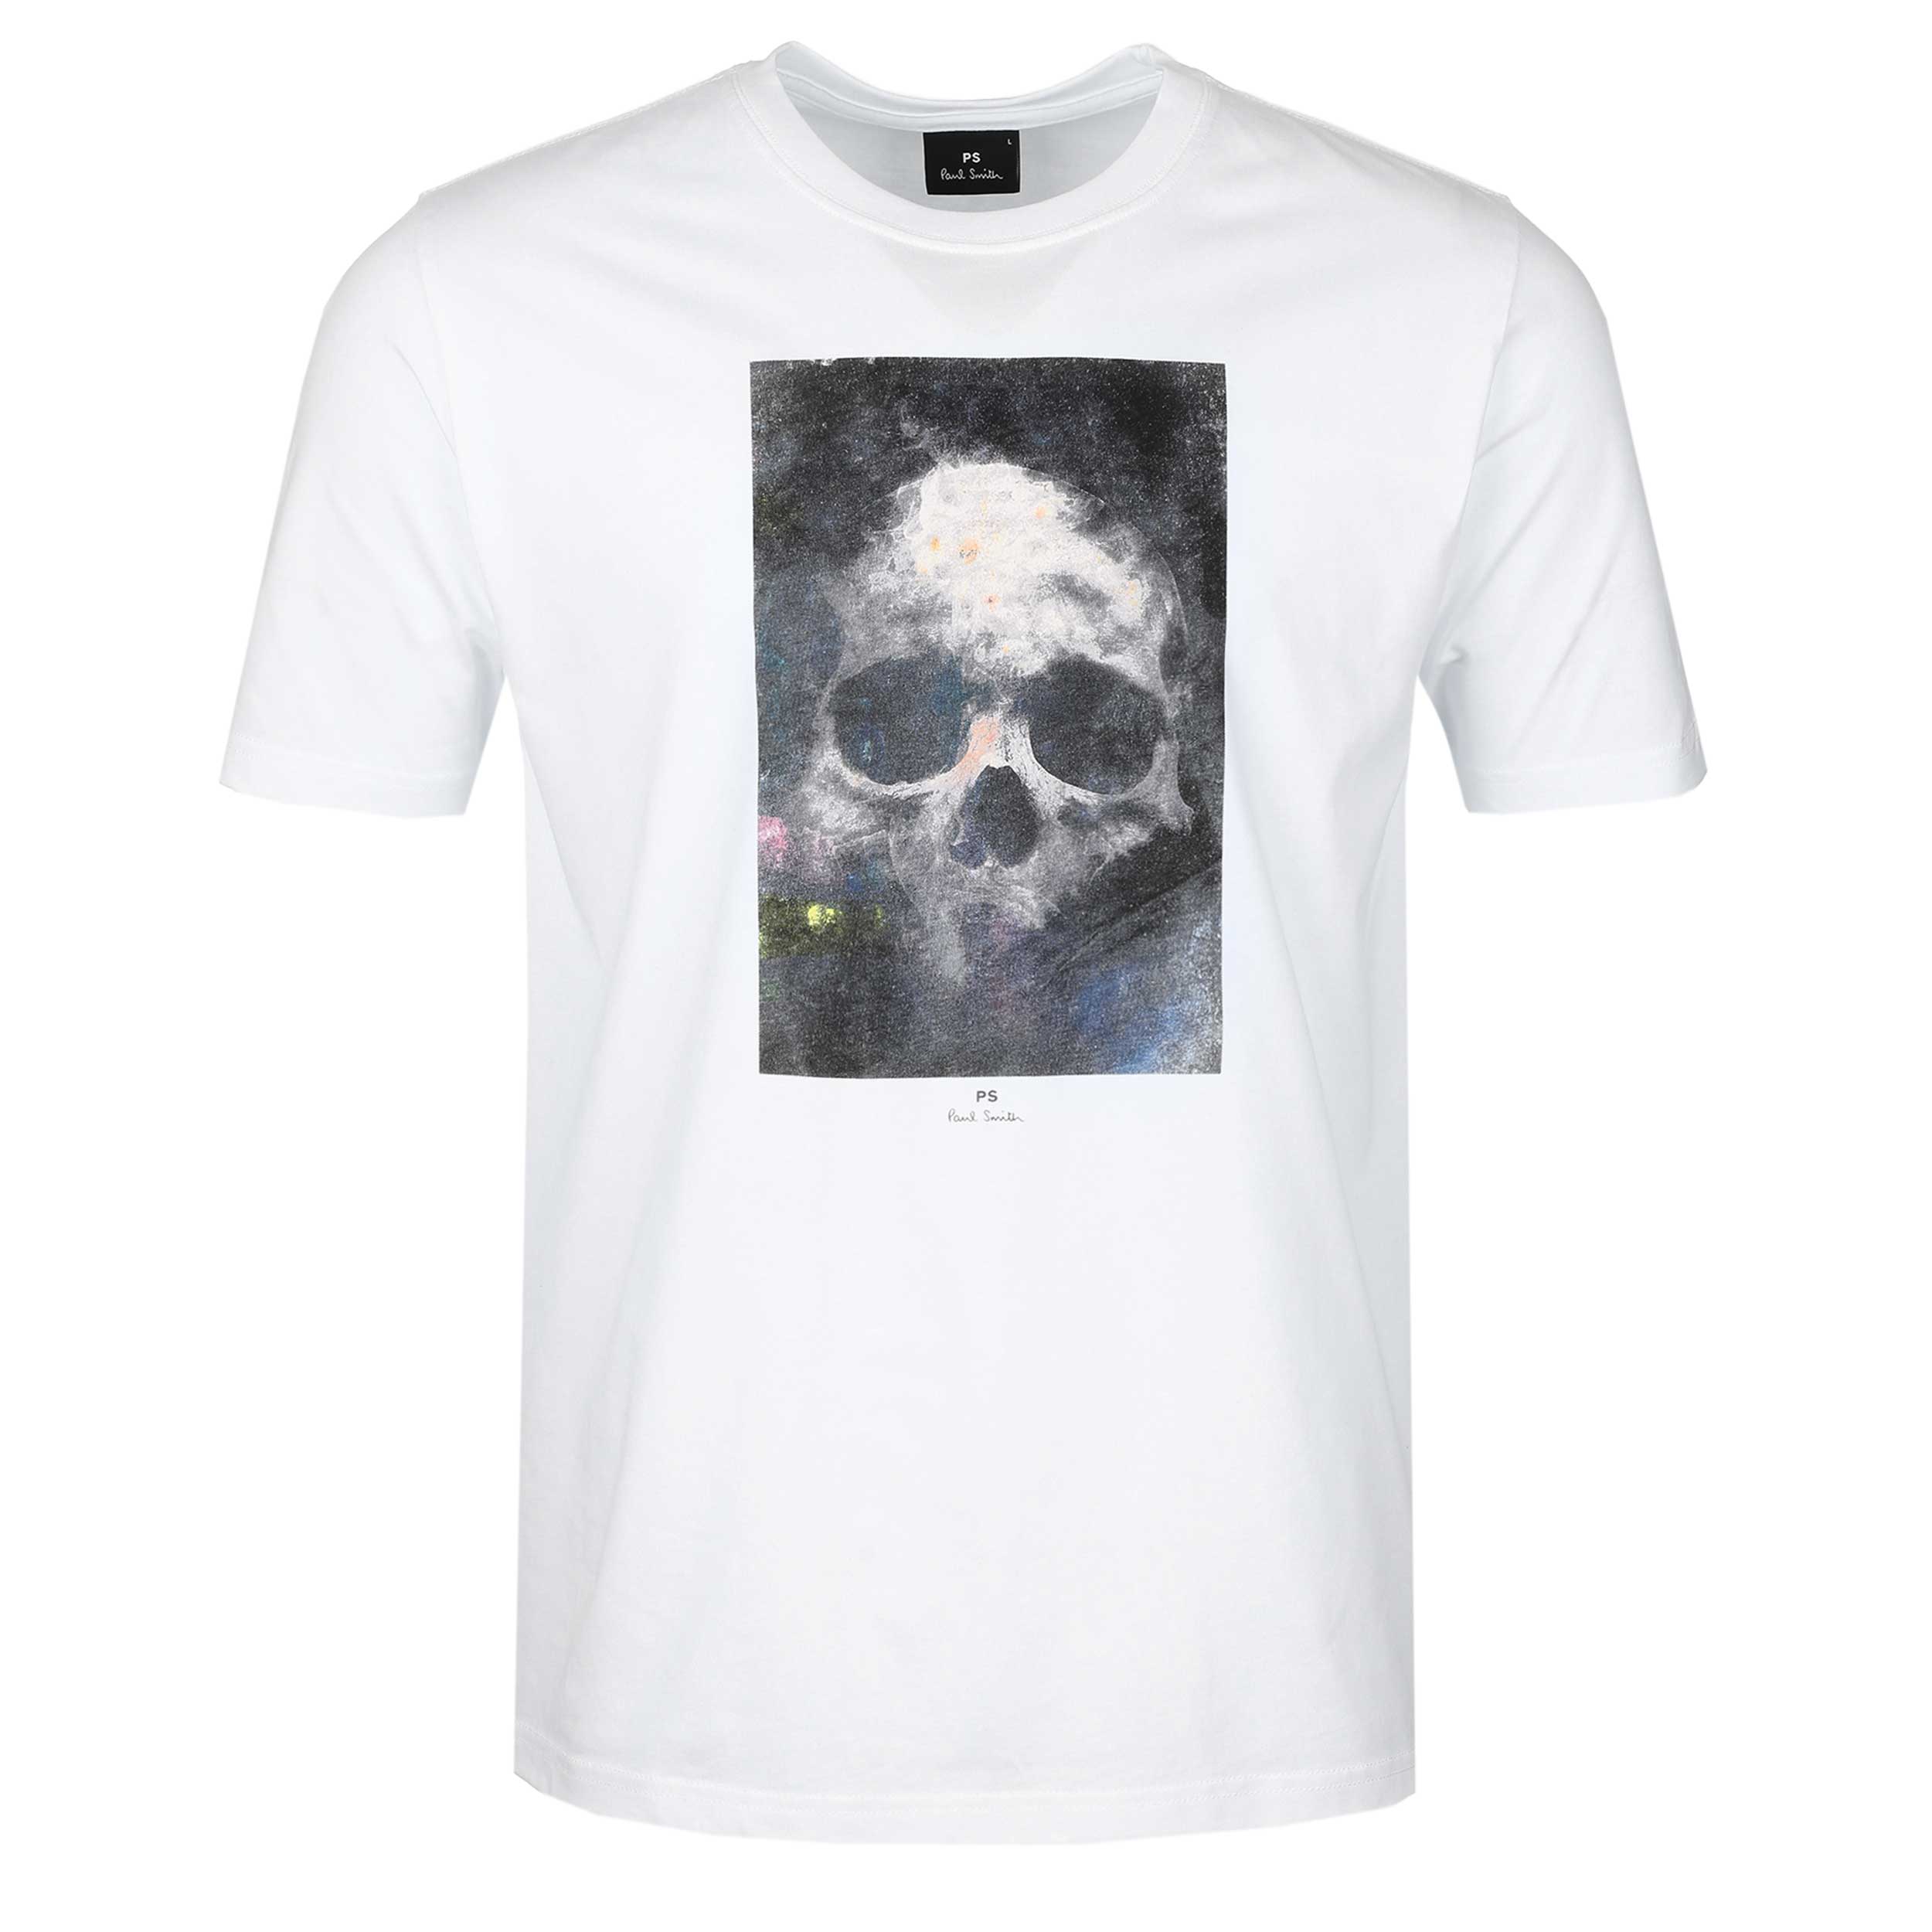 Paul Smith Skull T Shirt in White | Paul Smith | Norton Barrie